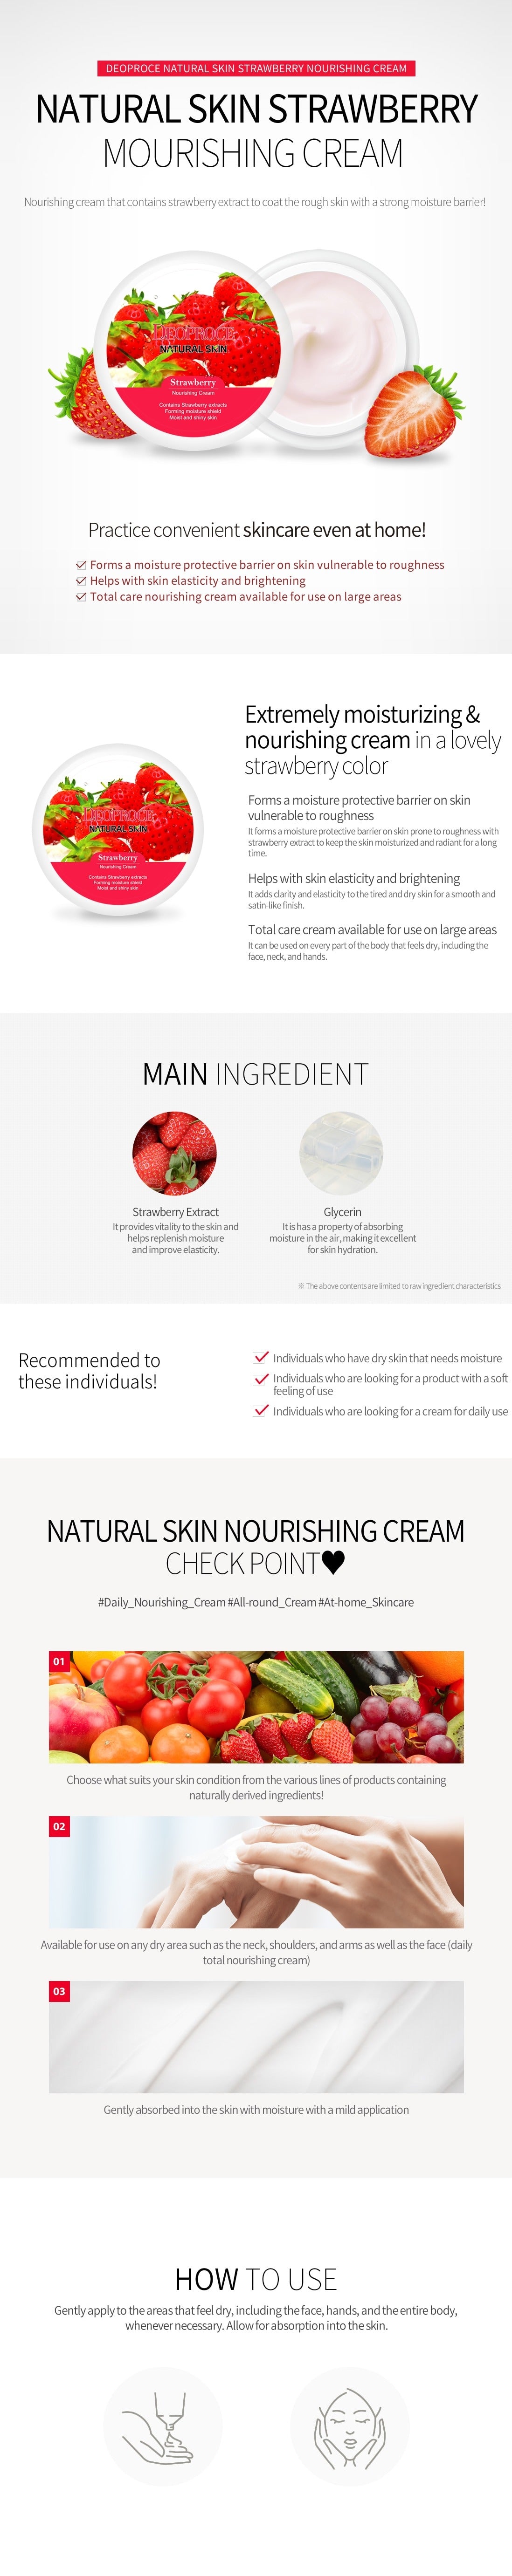 Deoproce Natural Skin Strawberry Nourishing Cream 100g